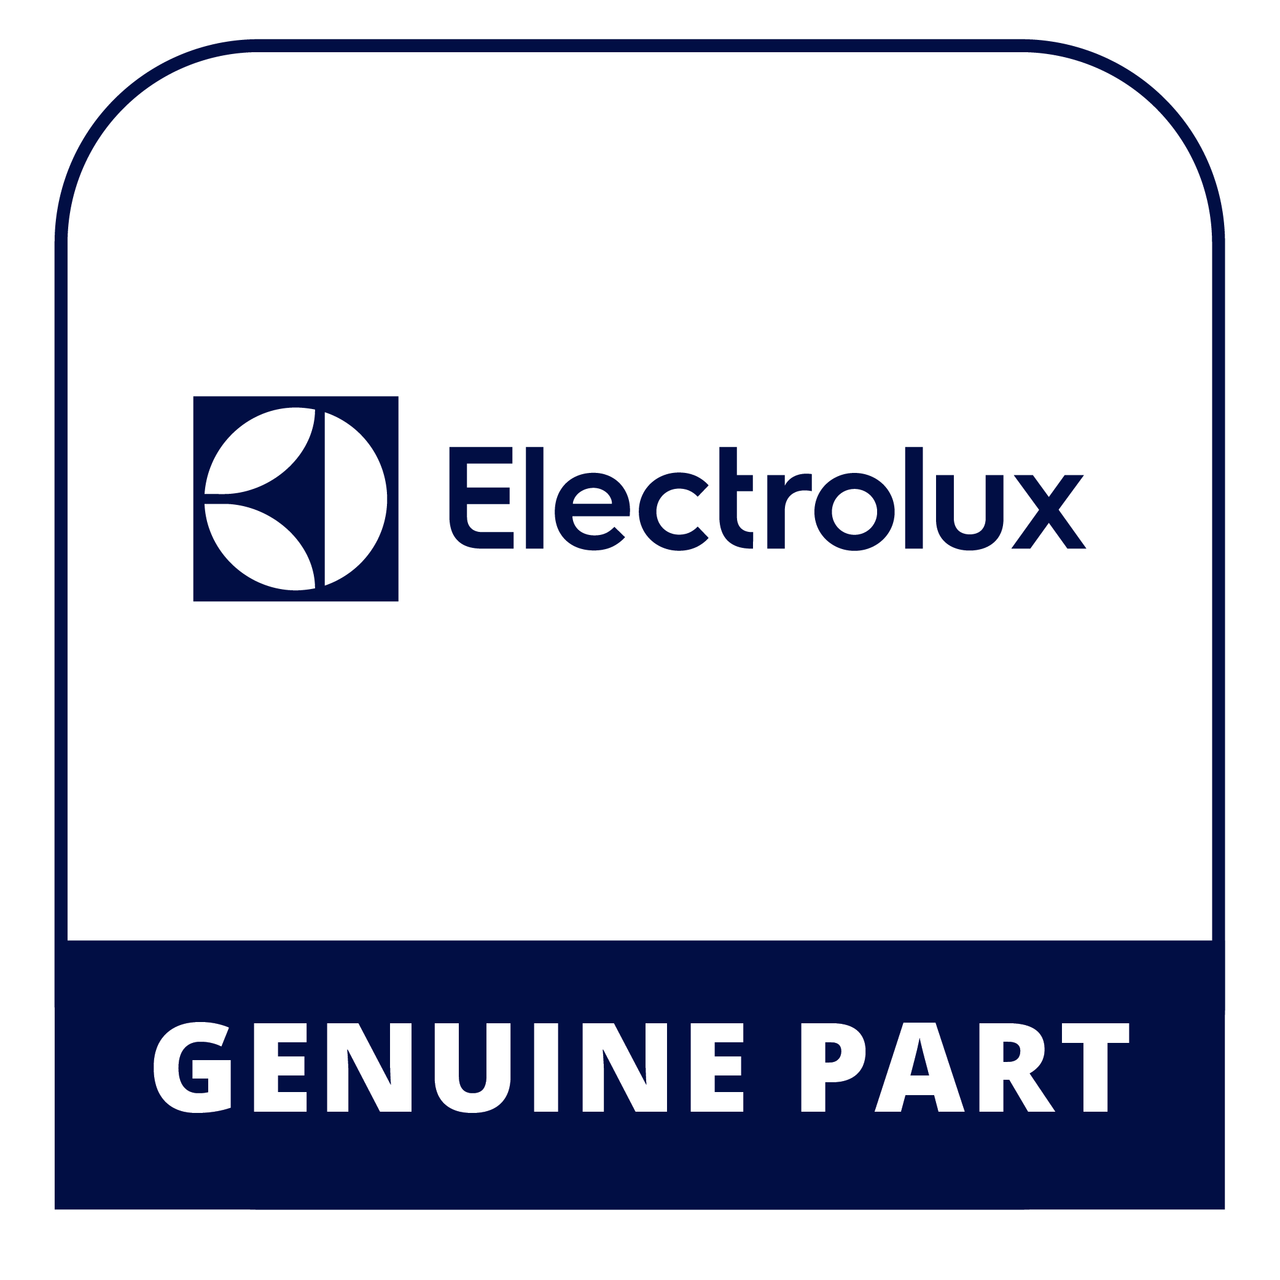 Frigidaire - Electrolux 5304527955 Trim Assembly - Genuine Electrolux Part